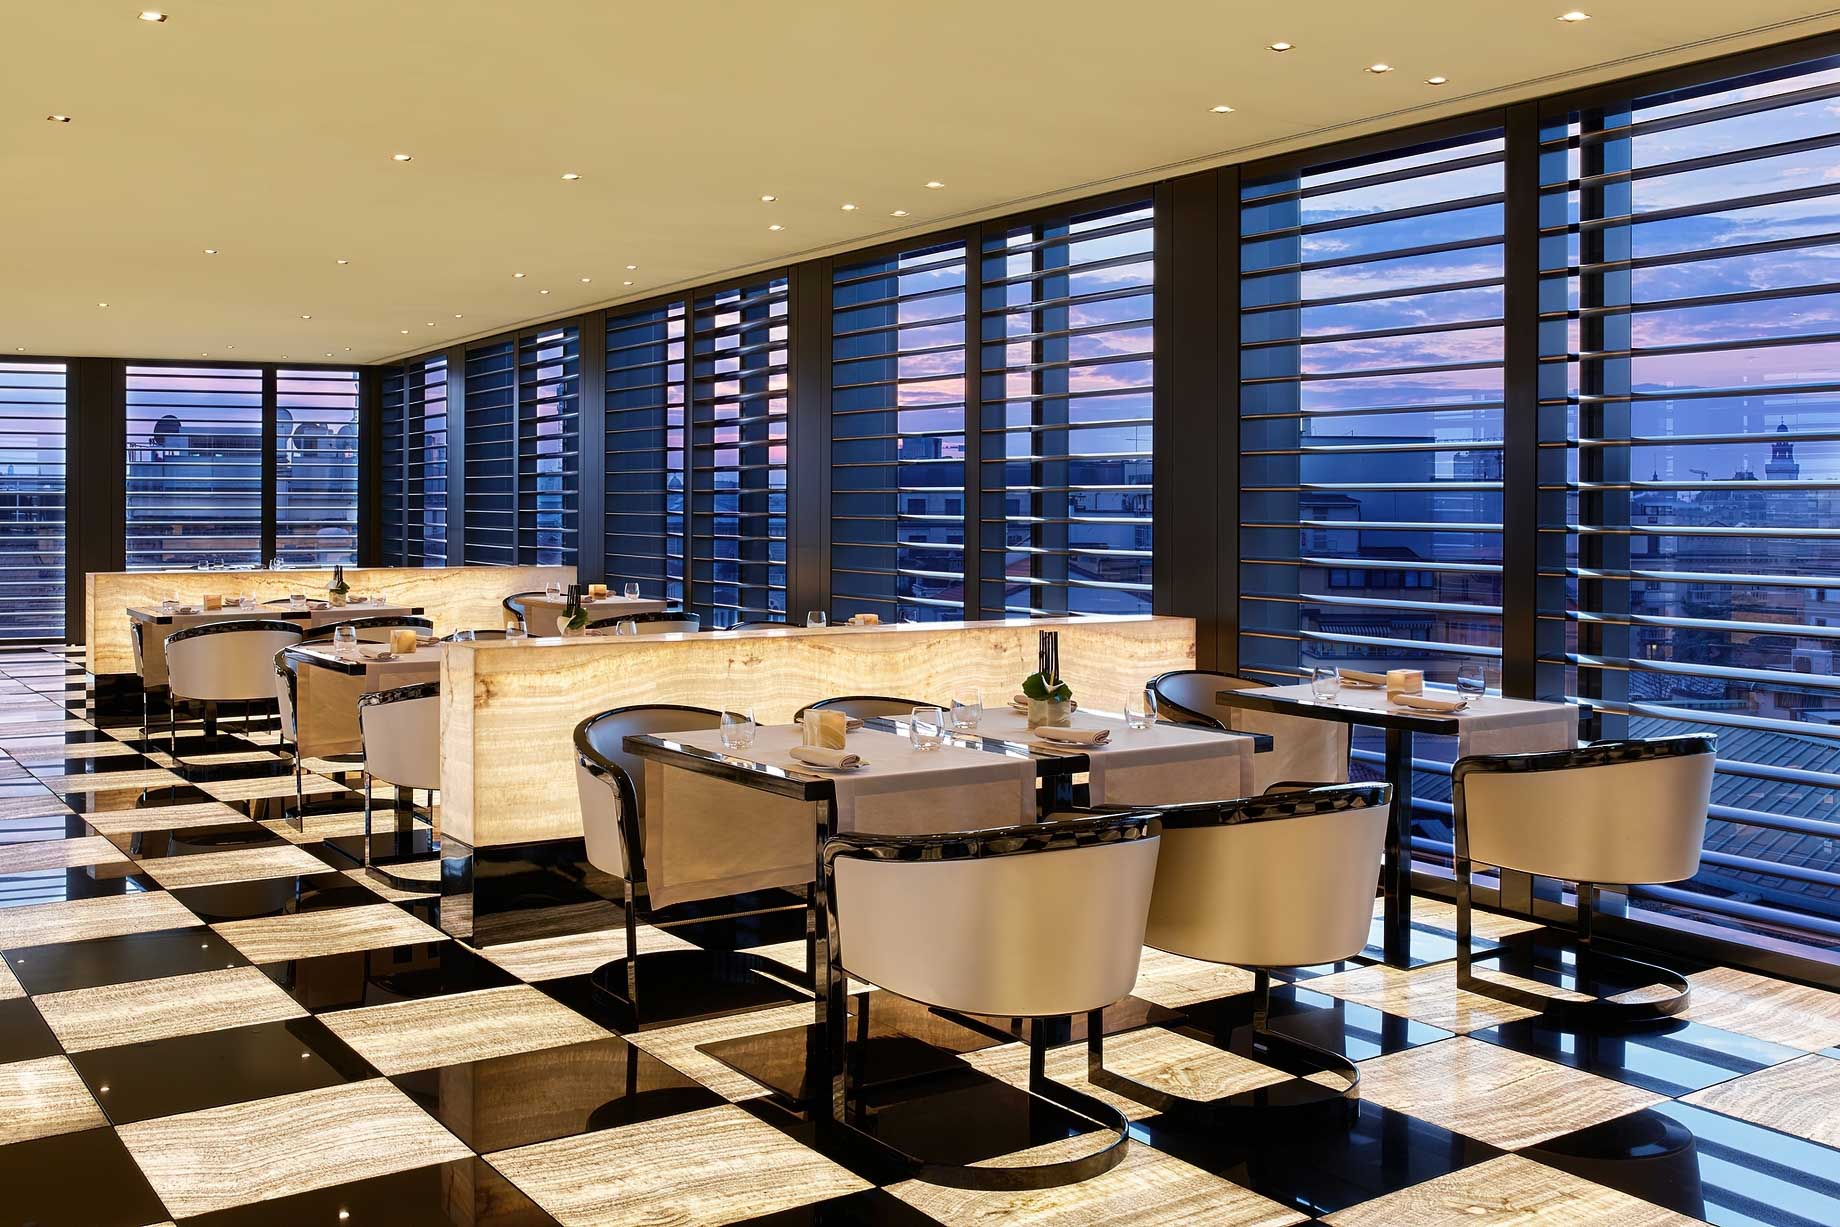 109 – Armani Hotel Milano – Milan, Italy – Armani Restaurant Table Seating Twilight